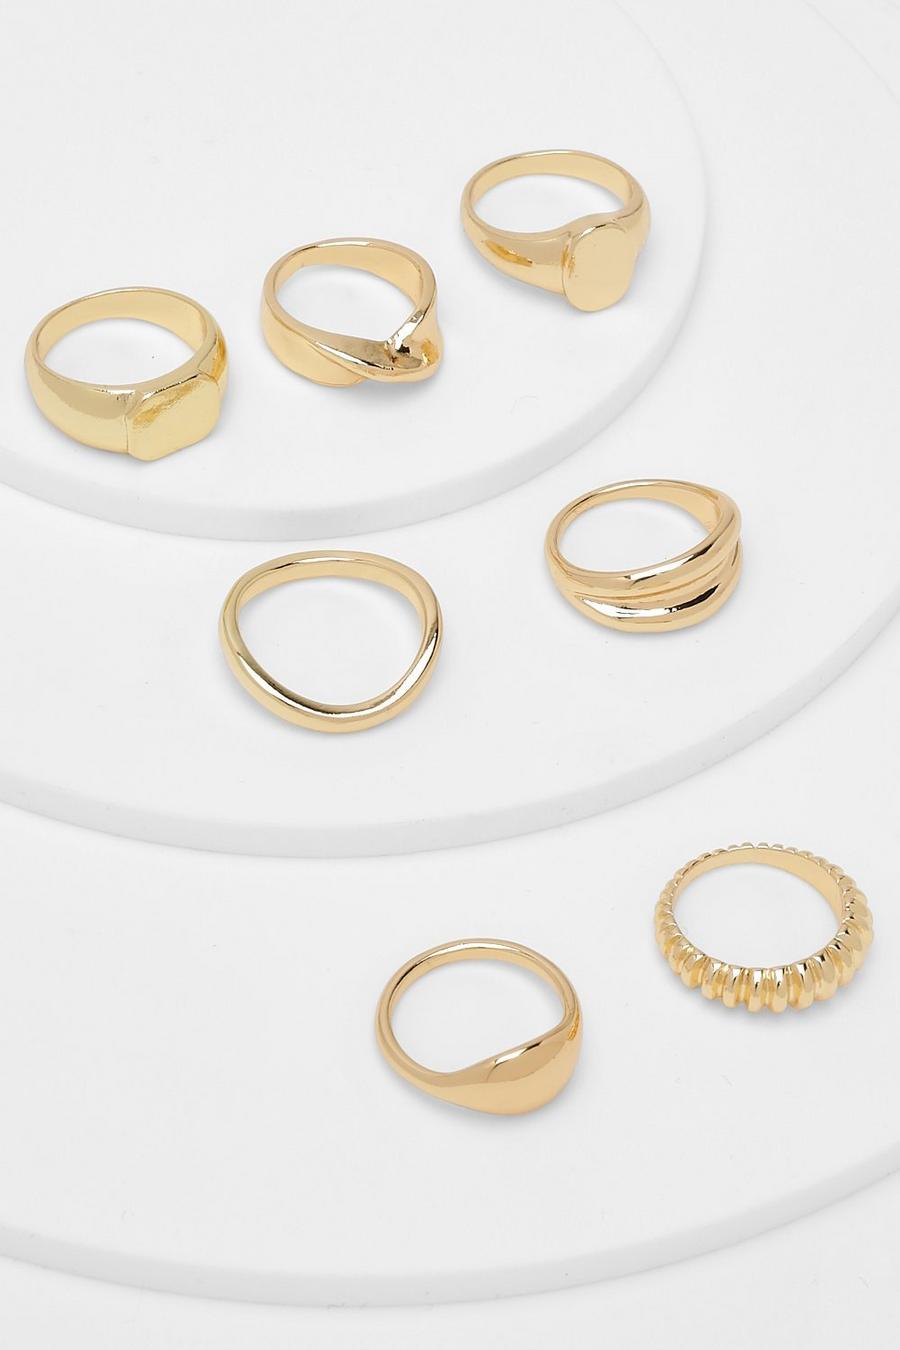 Stapel-Set mit Ringen in verschiedenen Goldtönen, Gold metallic